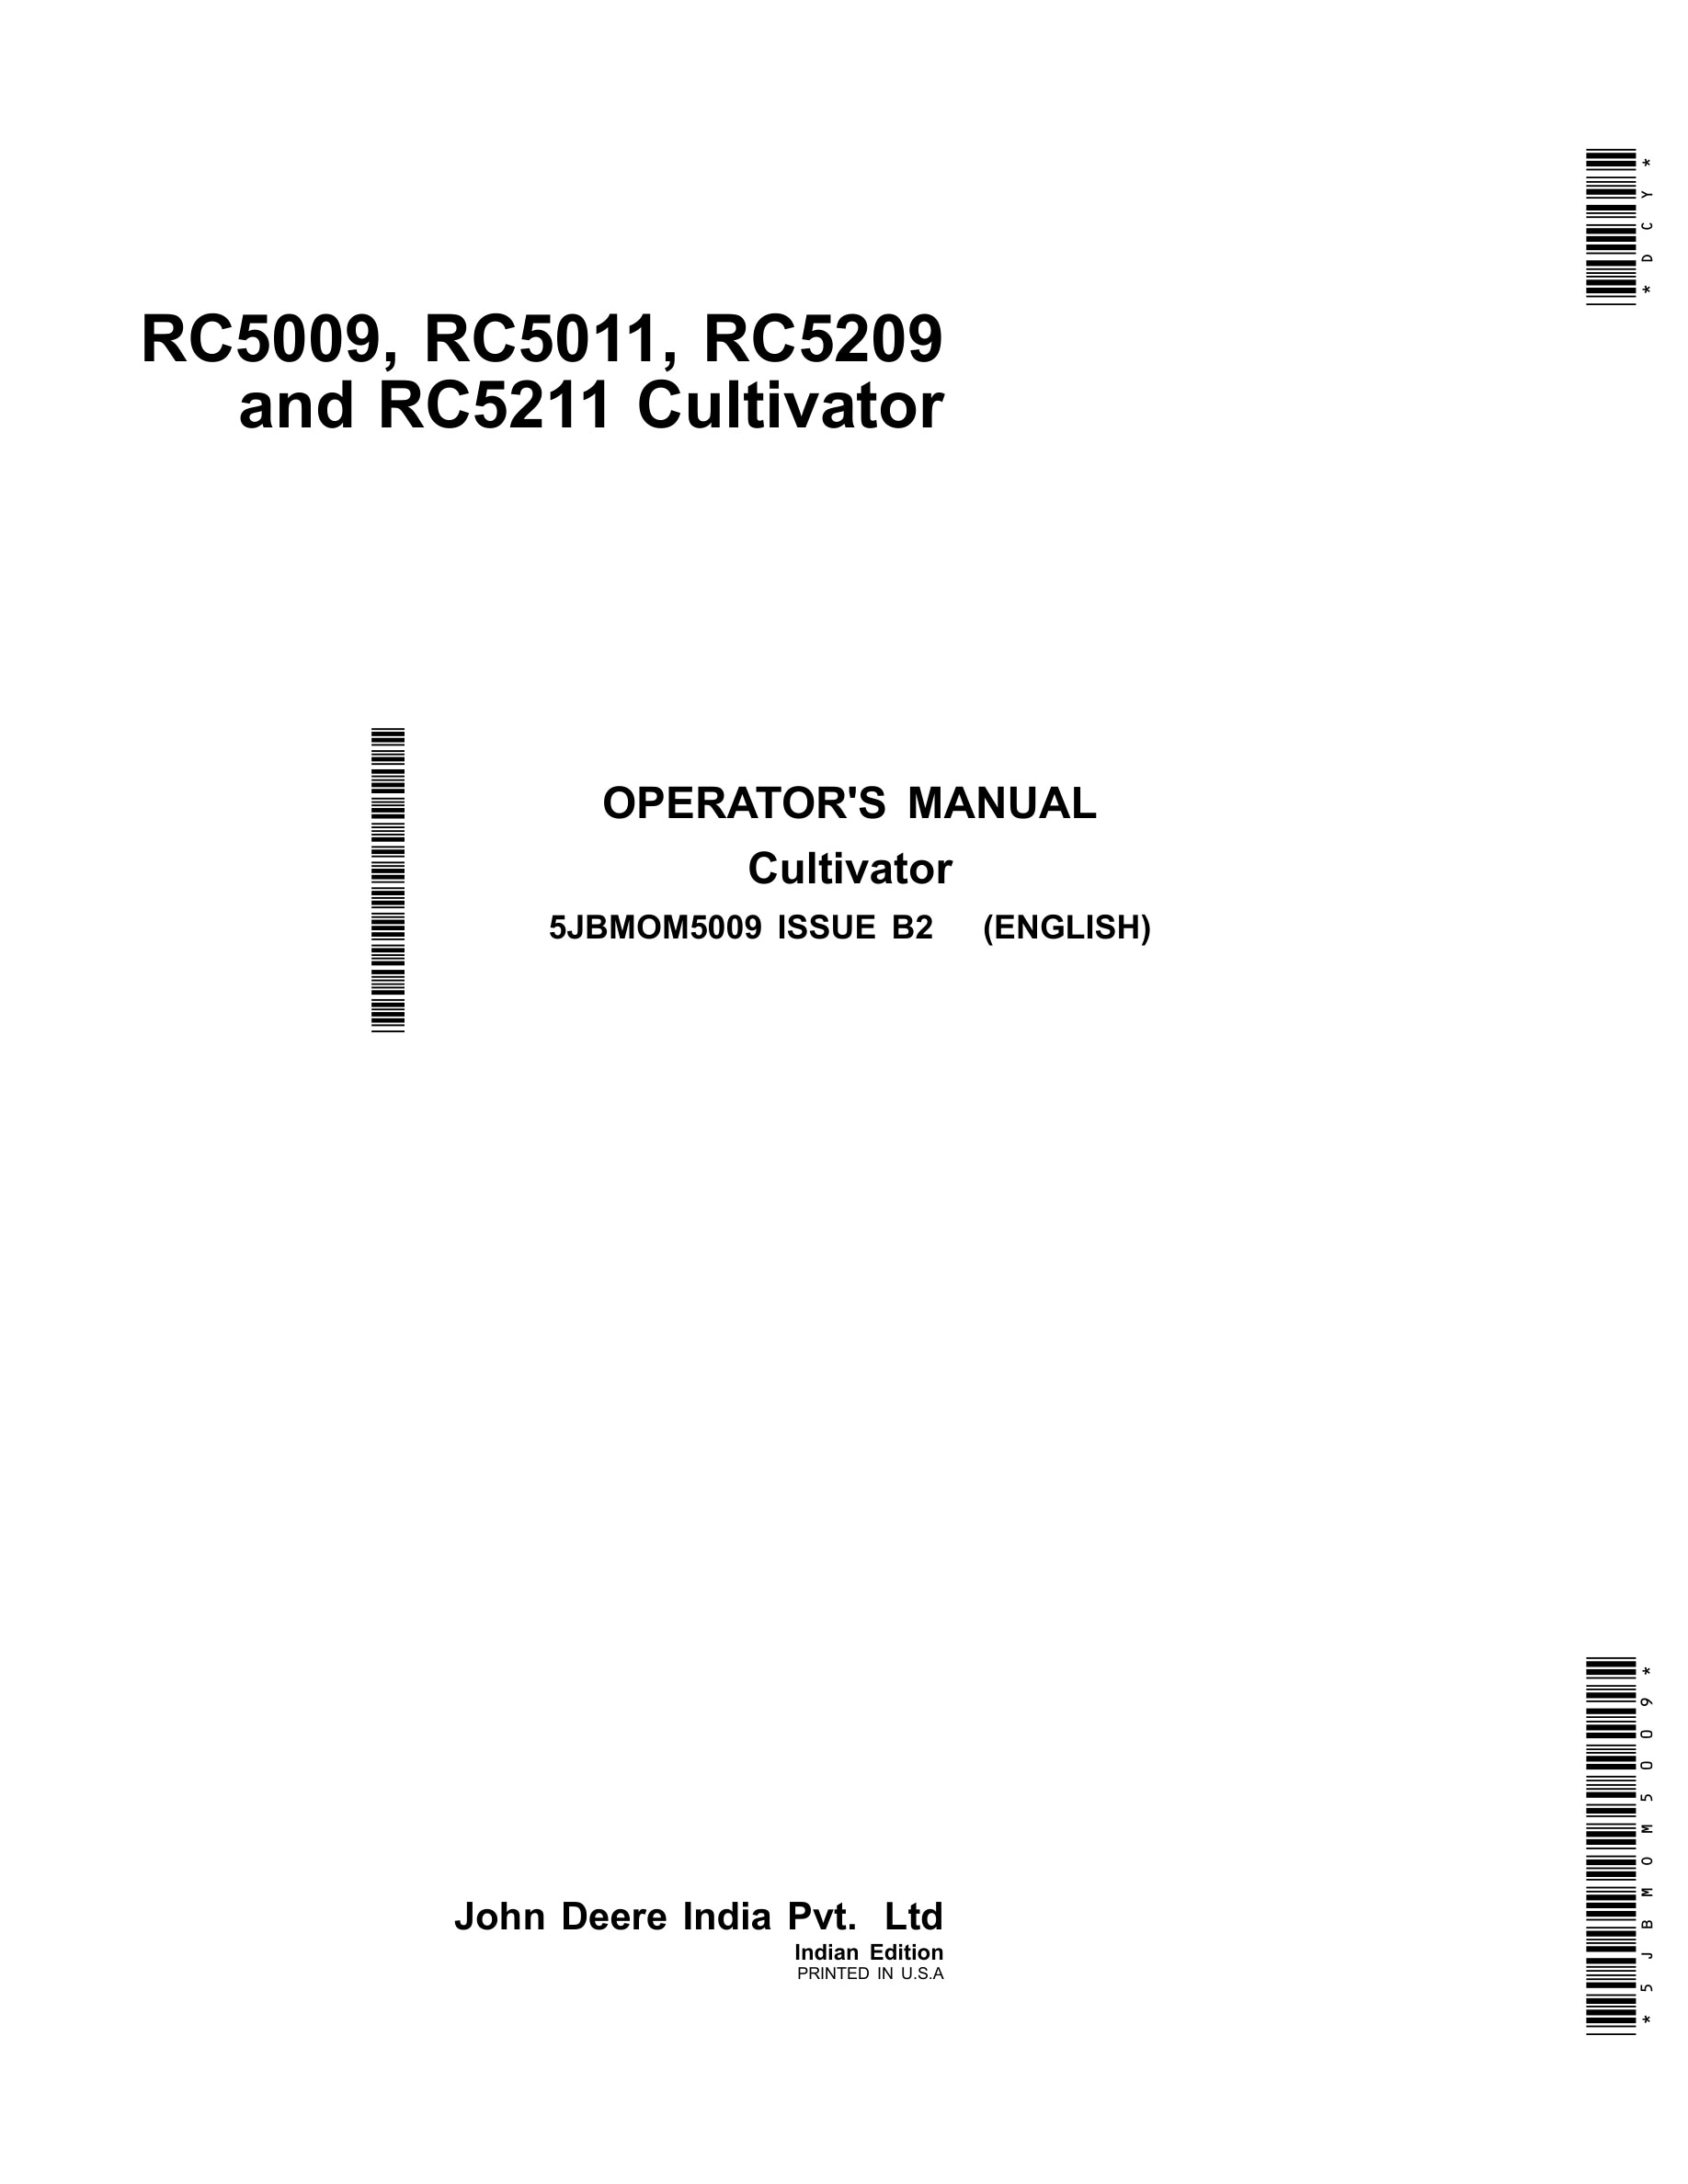 John Deere RC5009, RC5011, RC5209 and RC5211 CULTIVATOR Operator Manual 5JBMOM5009-1